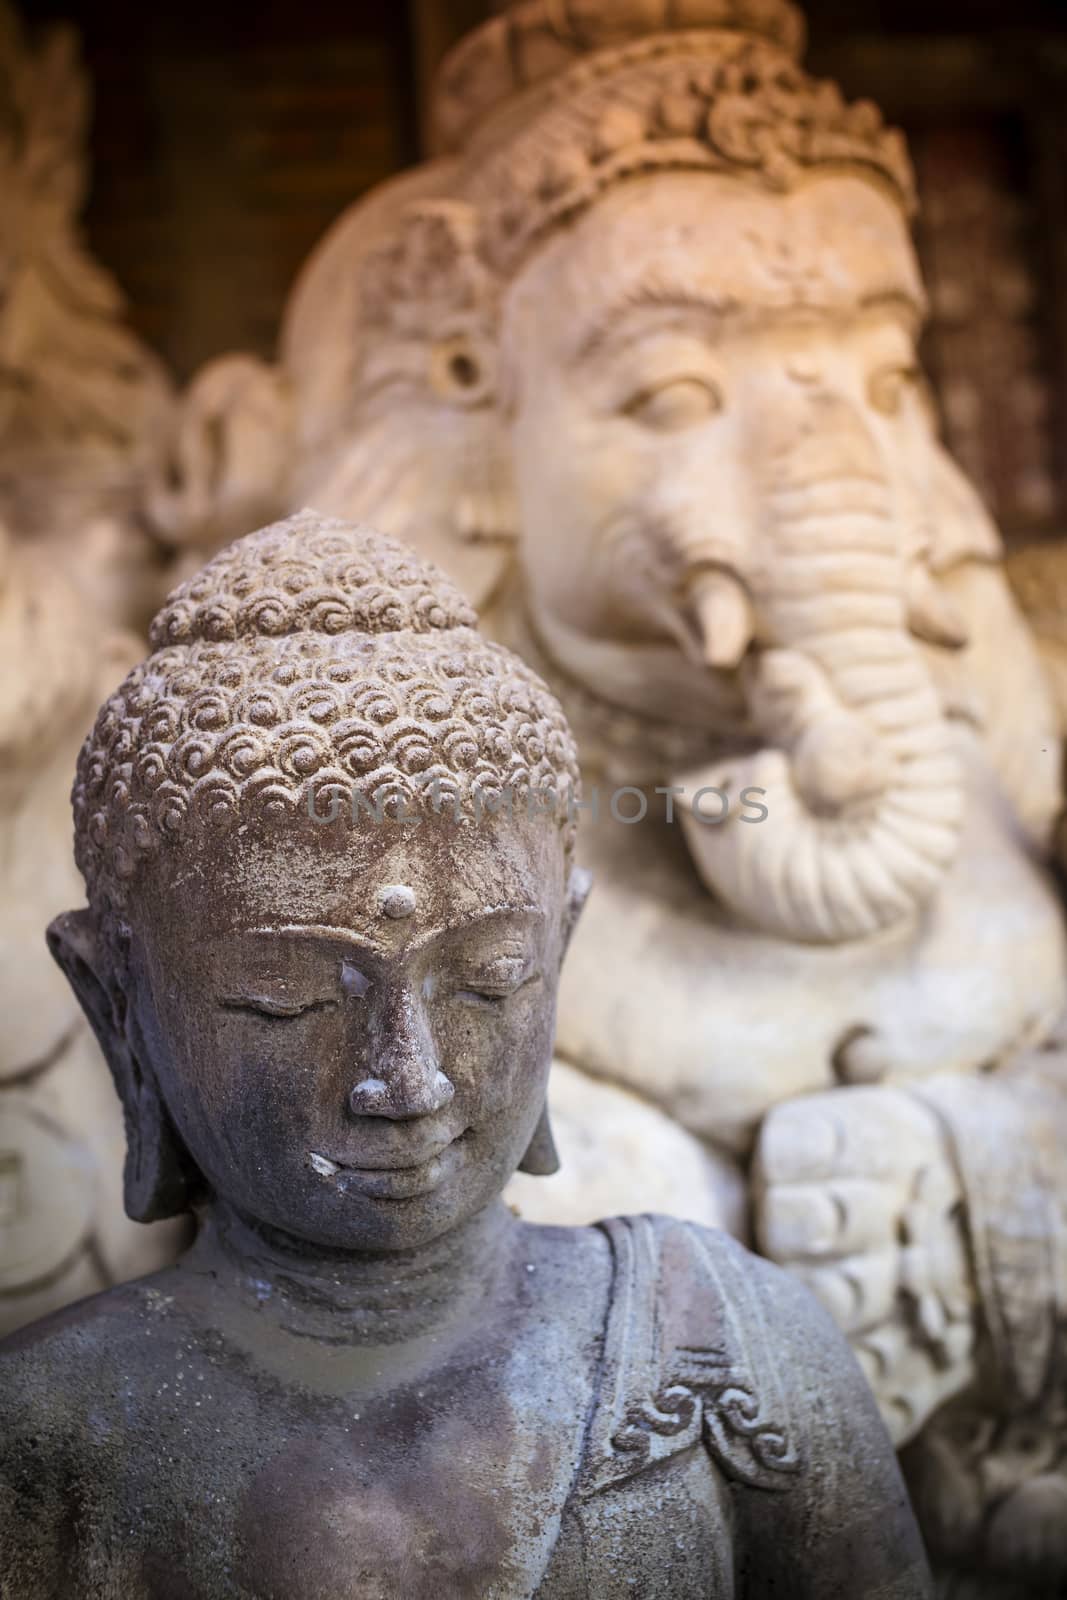 The old stone Buddha statue. Indonesia, Bali.
